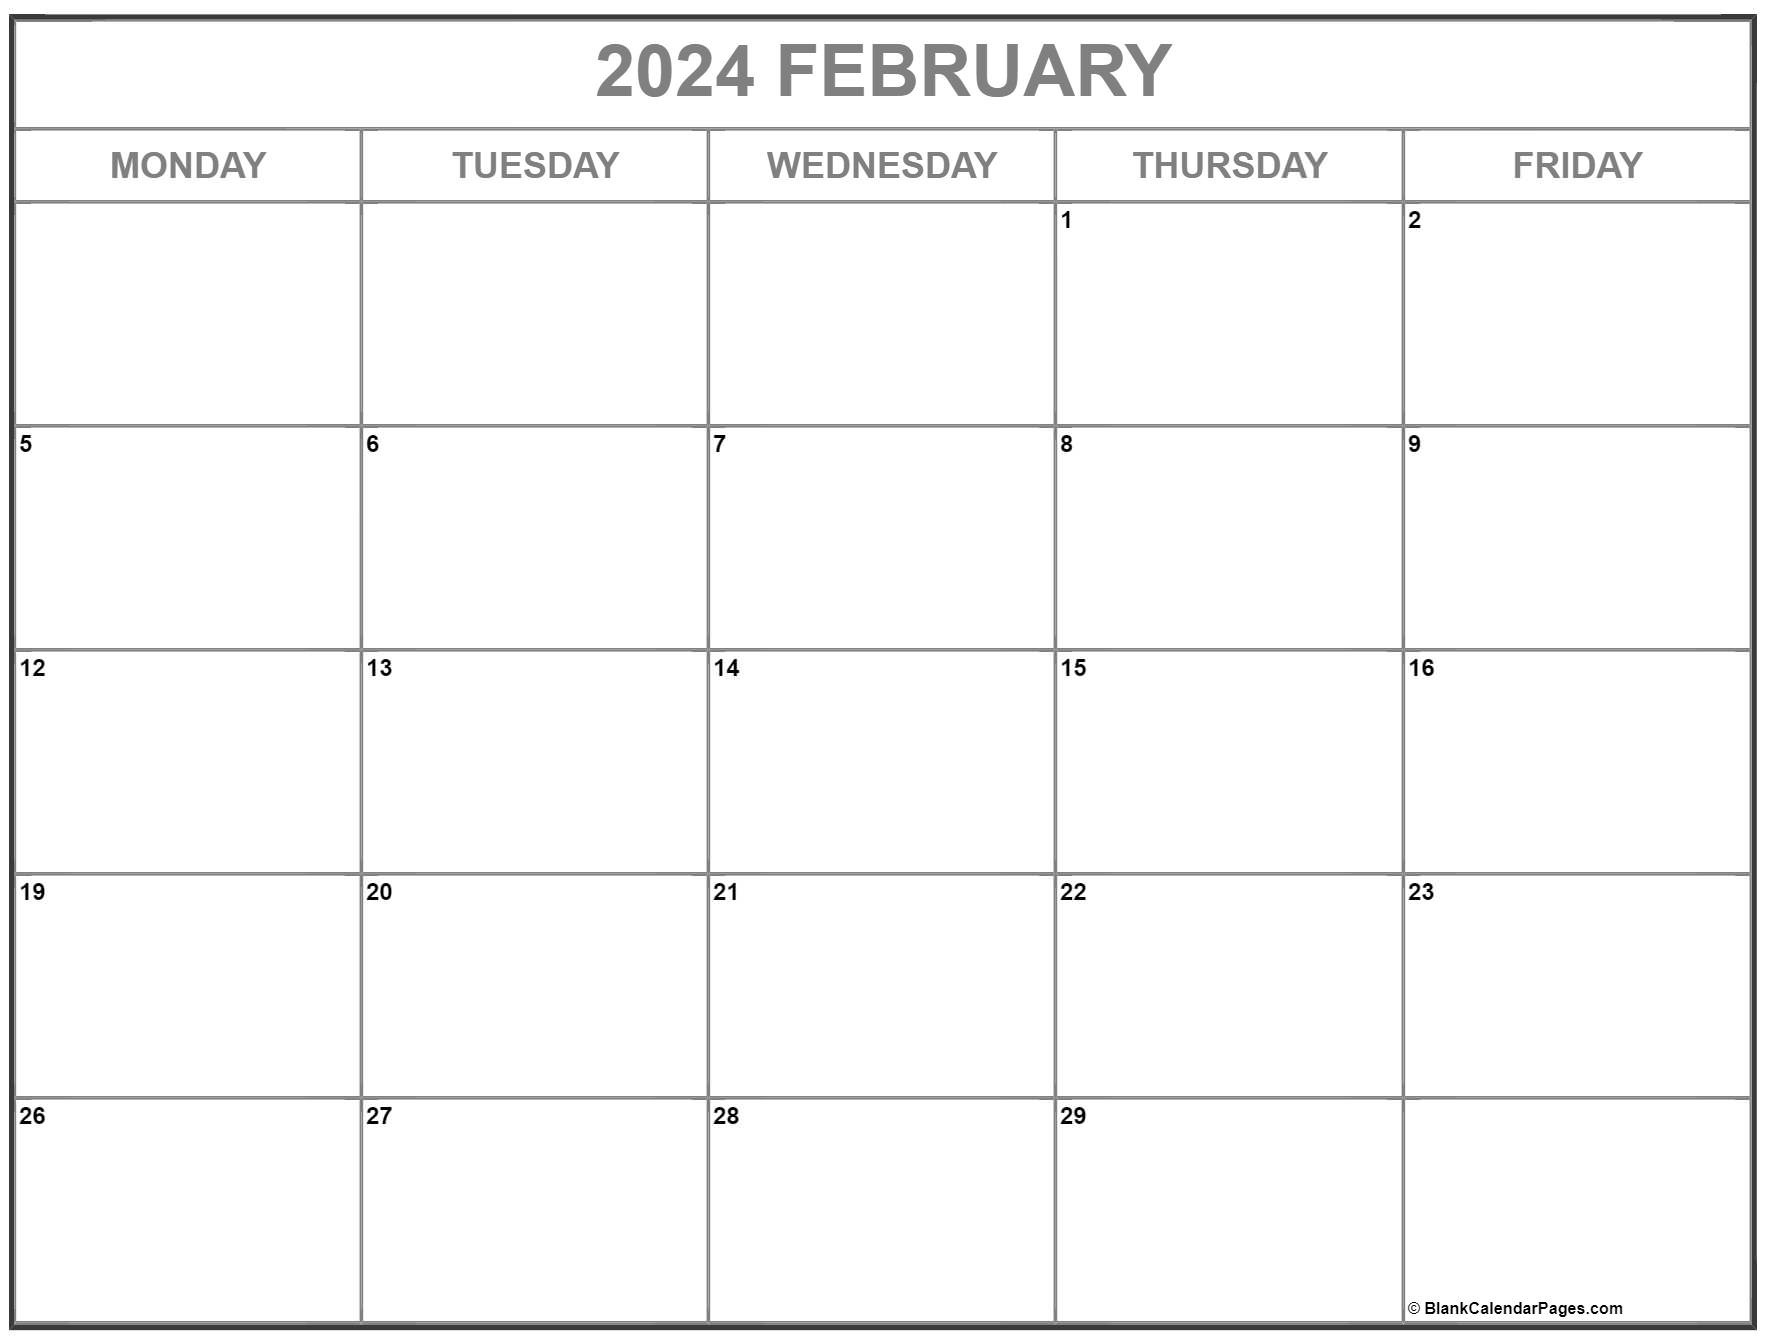 February 2020 Monday Calendar Monday to Sunday